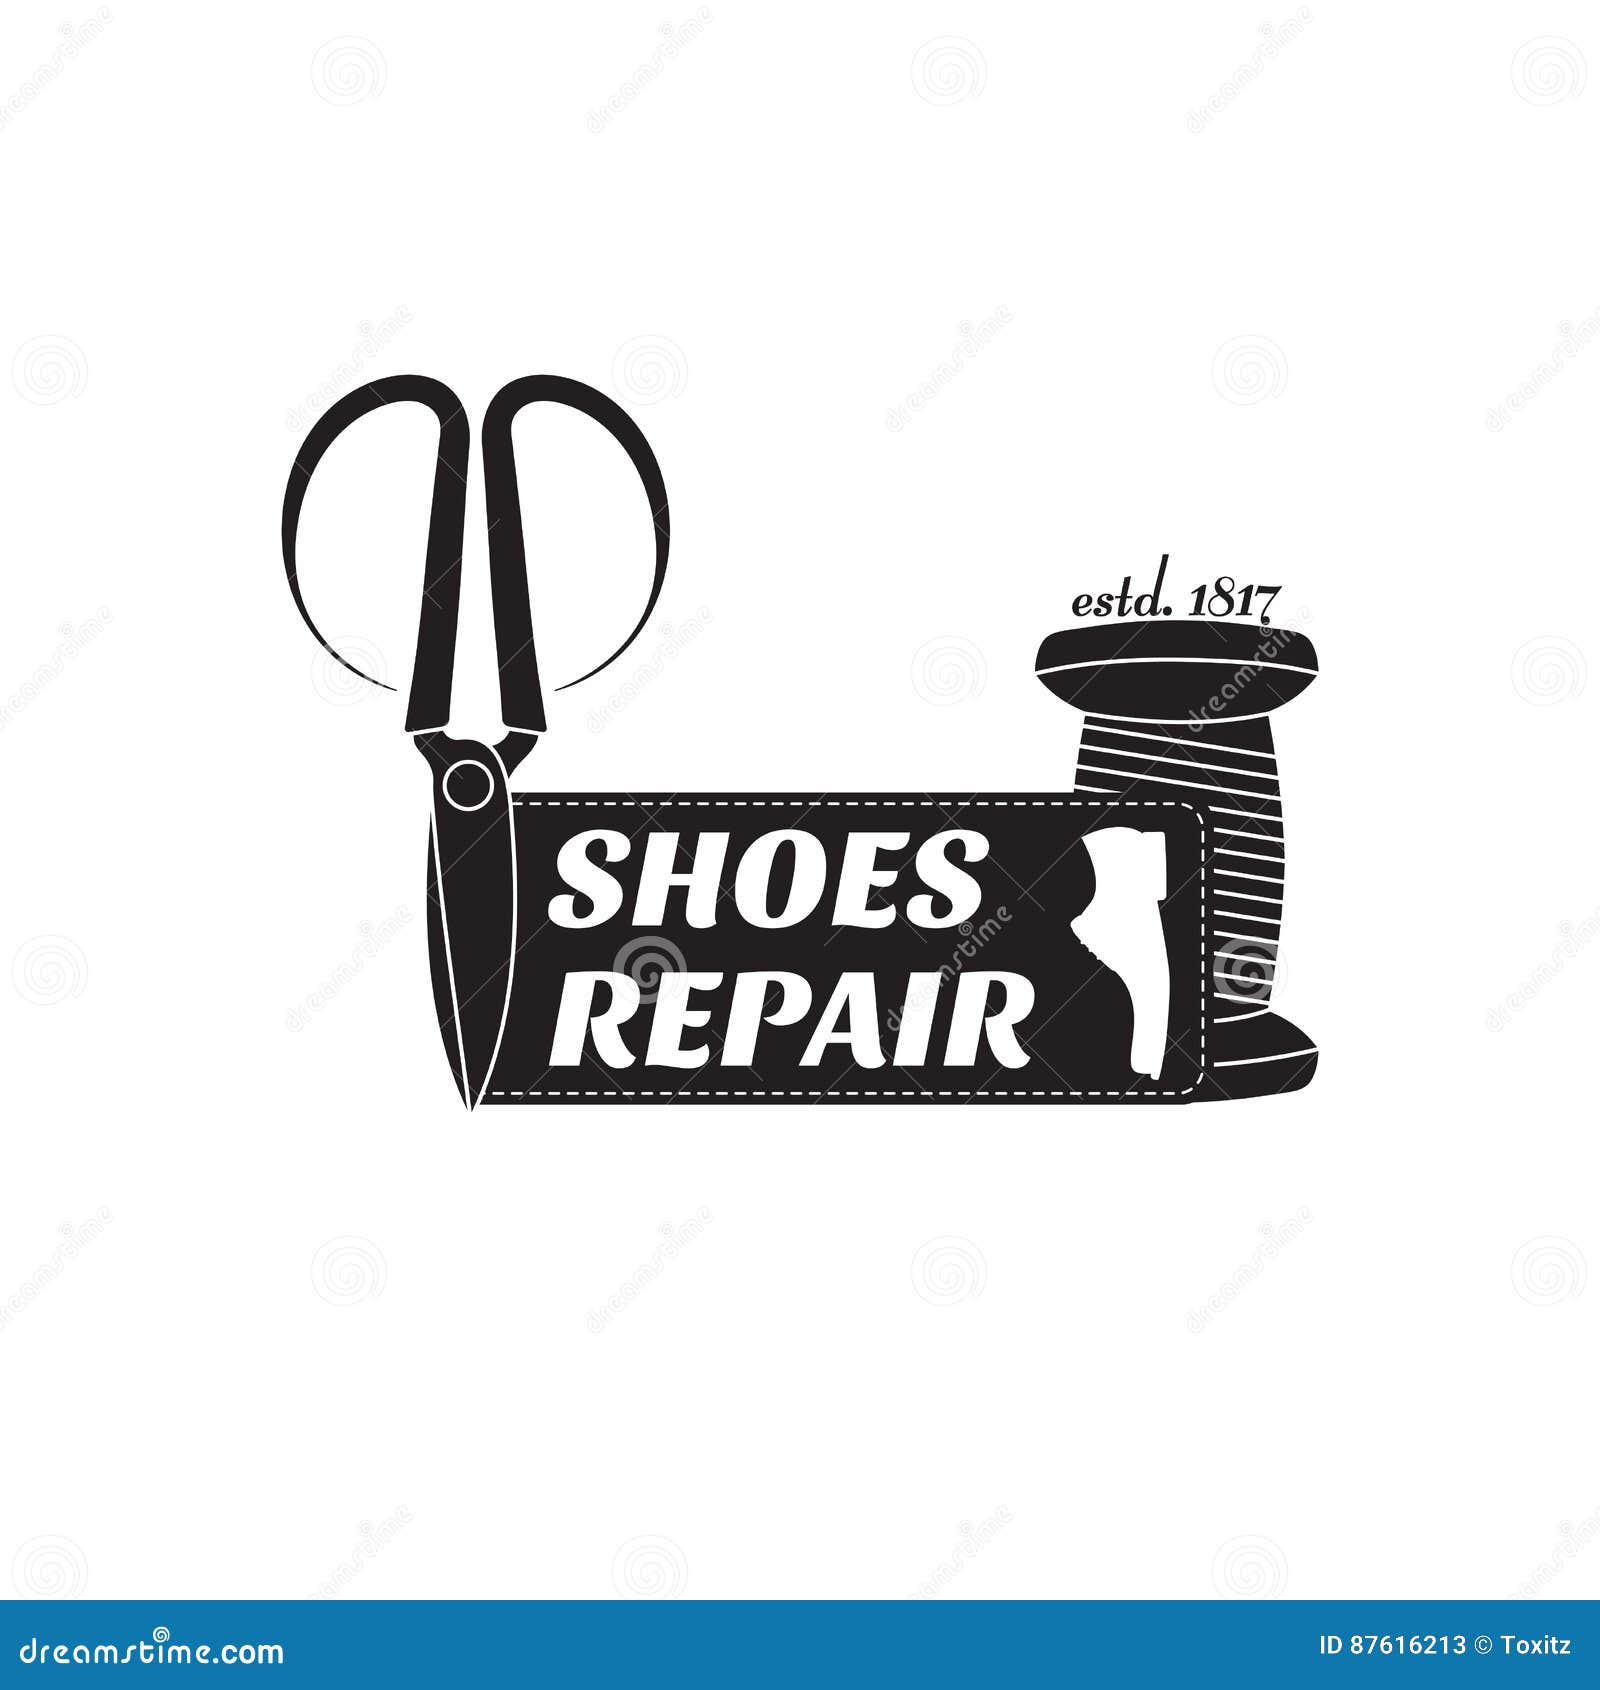 Shoe Repair Services